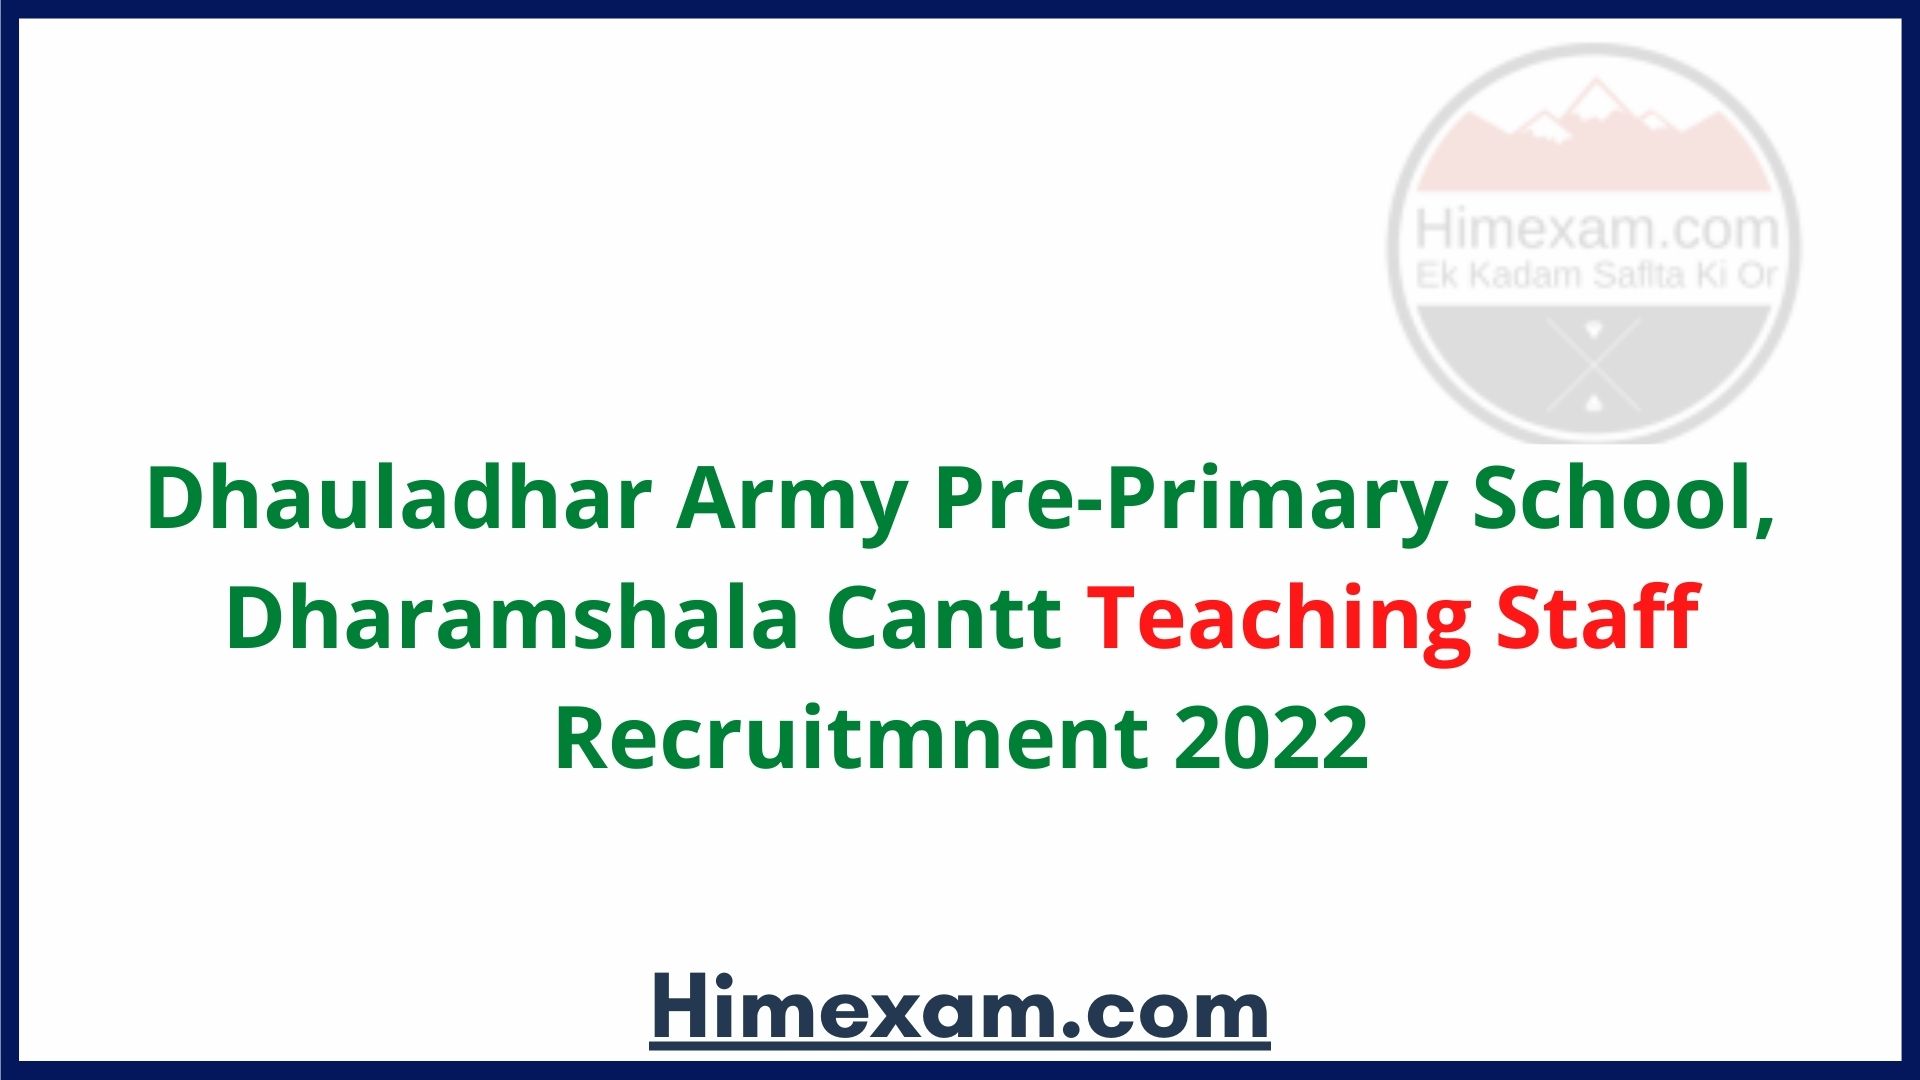 Dhauladhar Army Pre-Primary School, Dharamshala Cantt Teaching Staff Recruitmnent 2022